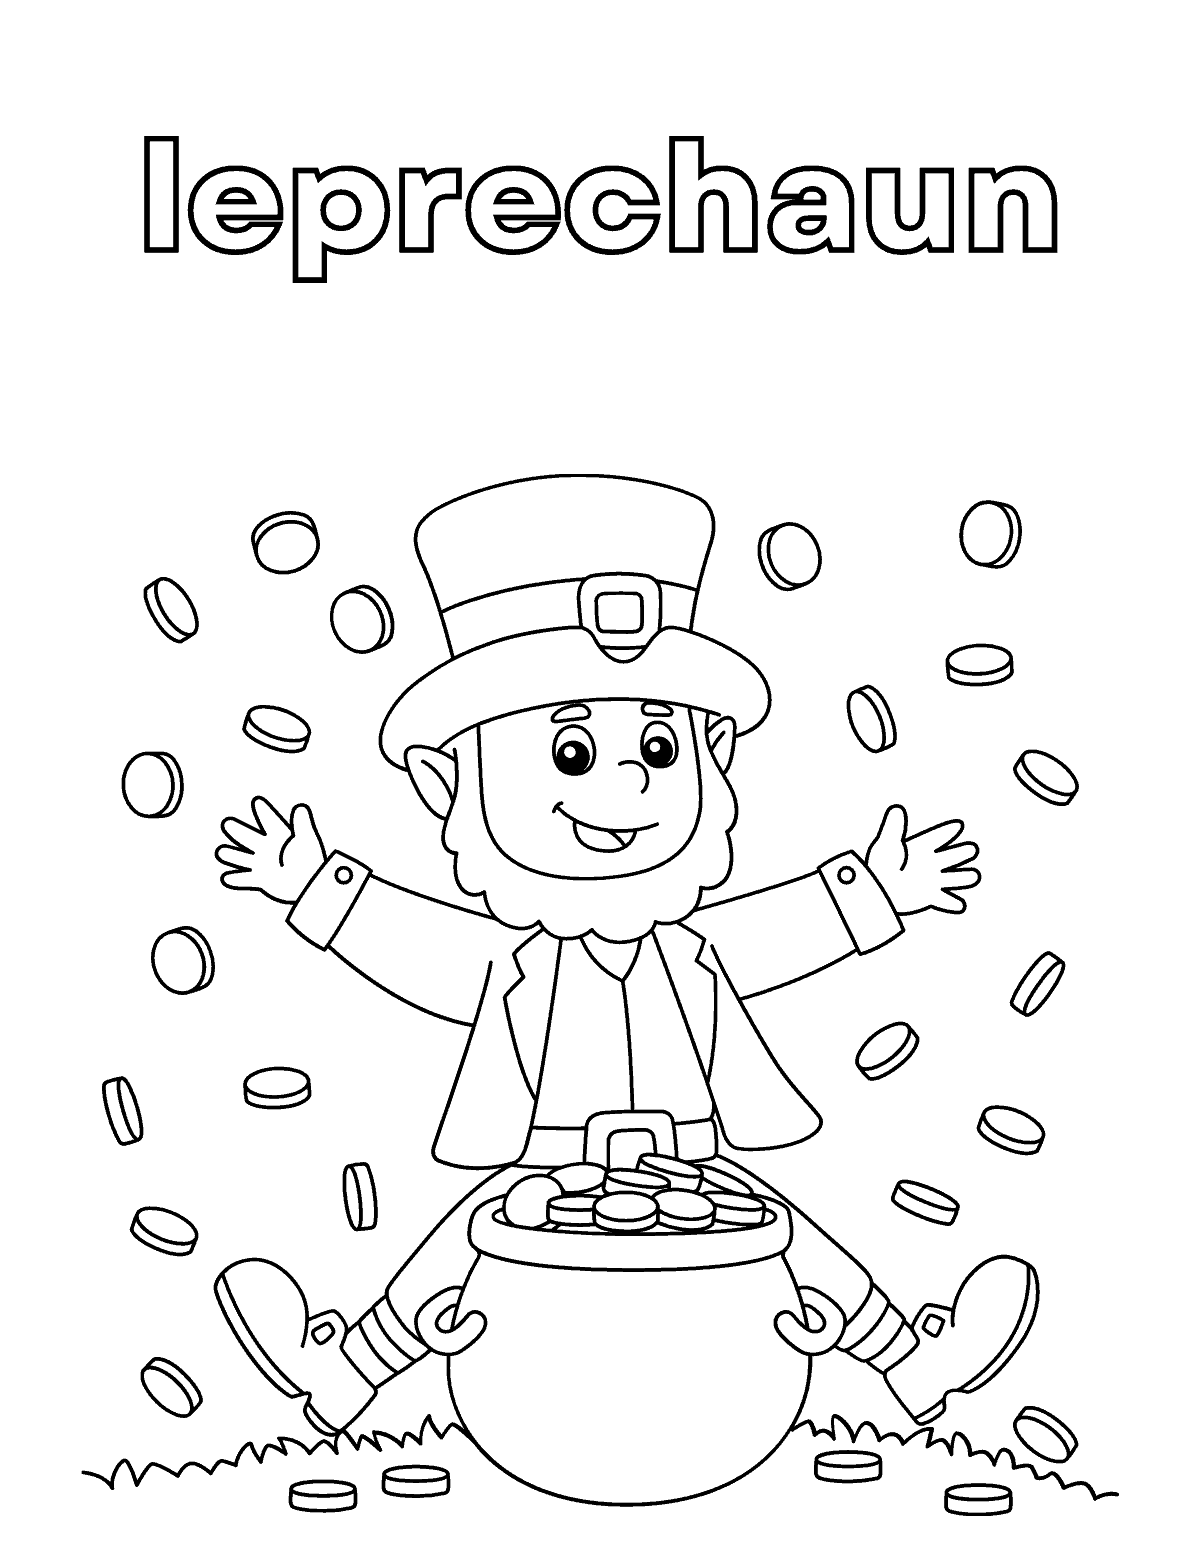 Leprechaun with pot of gold